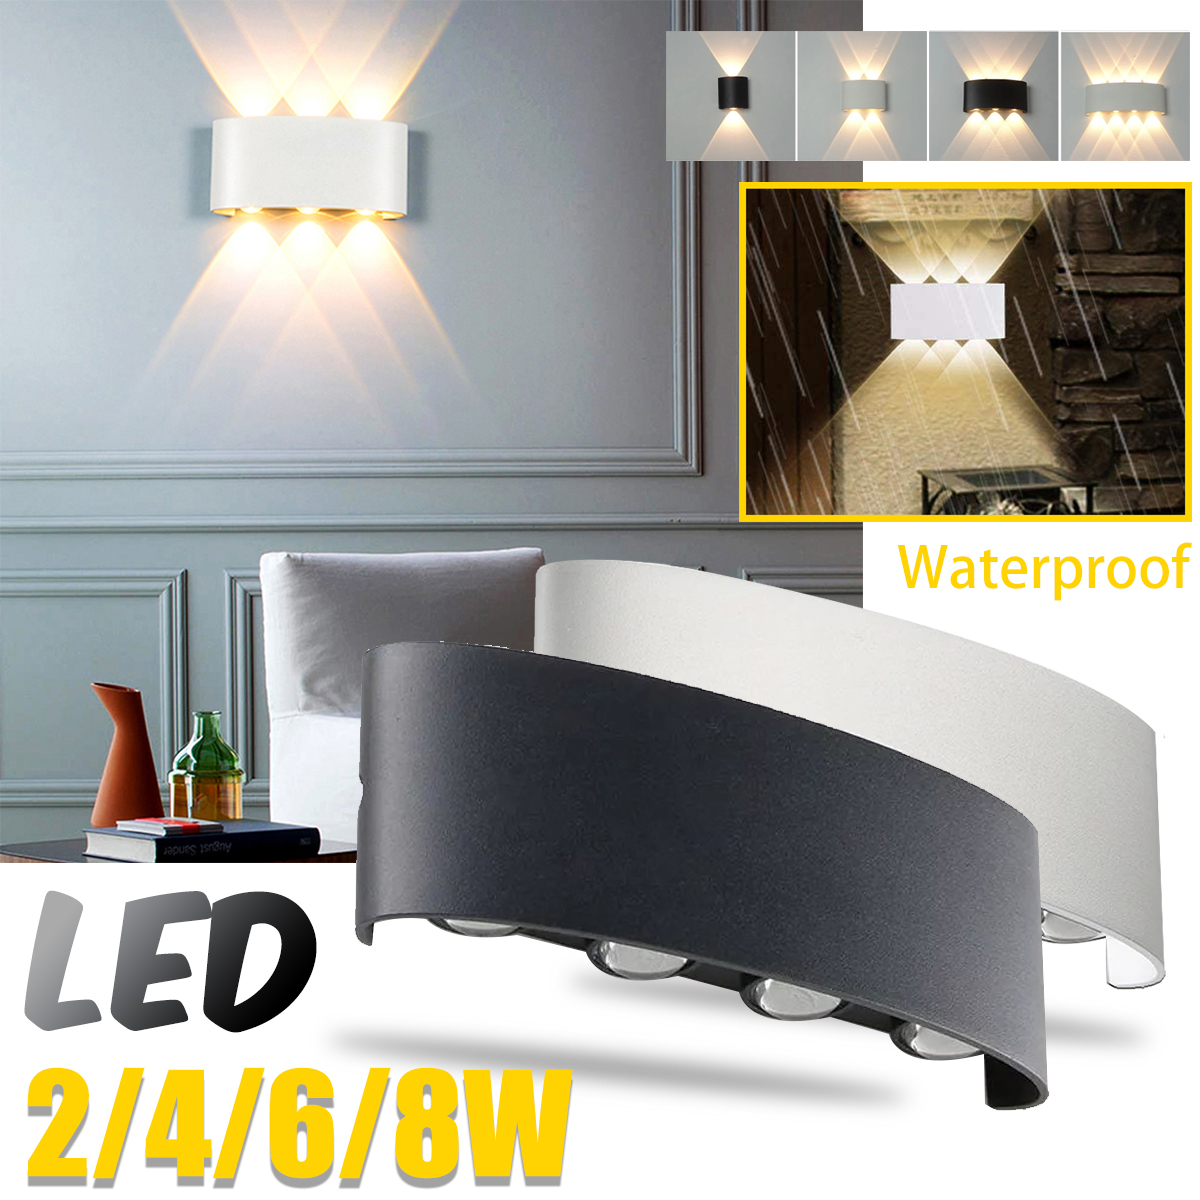 Waterproof-2-8W-LED-Wall-Light-Up-Down-Lighting-Sconce-Lamp-Indoor-Outdoor-IP65-1850910-1